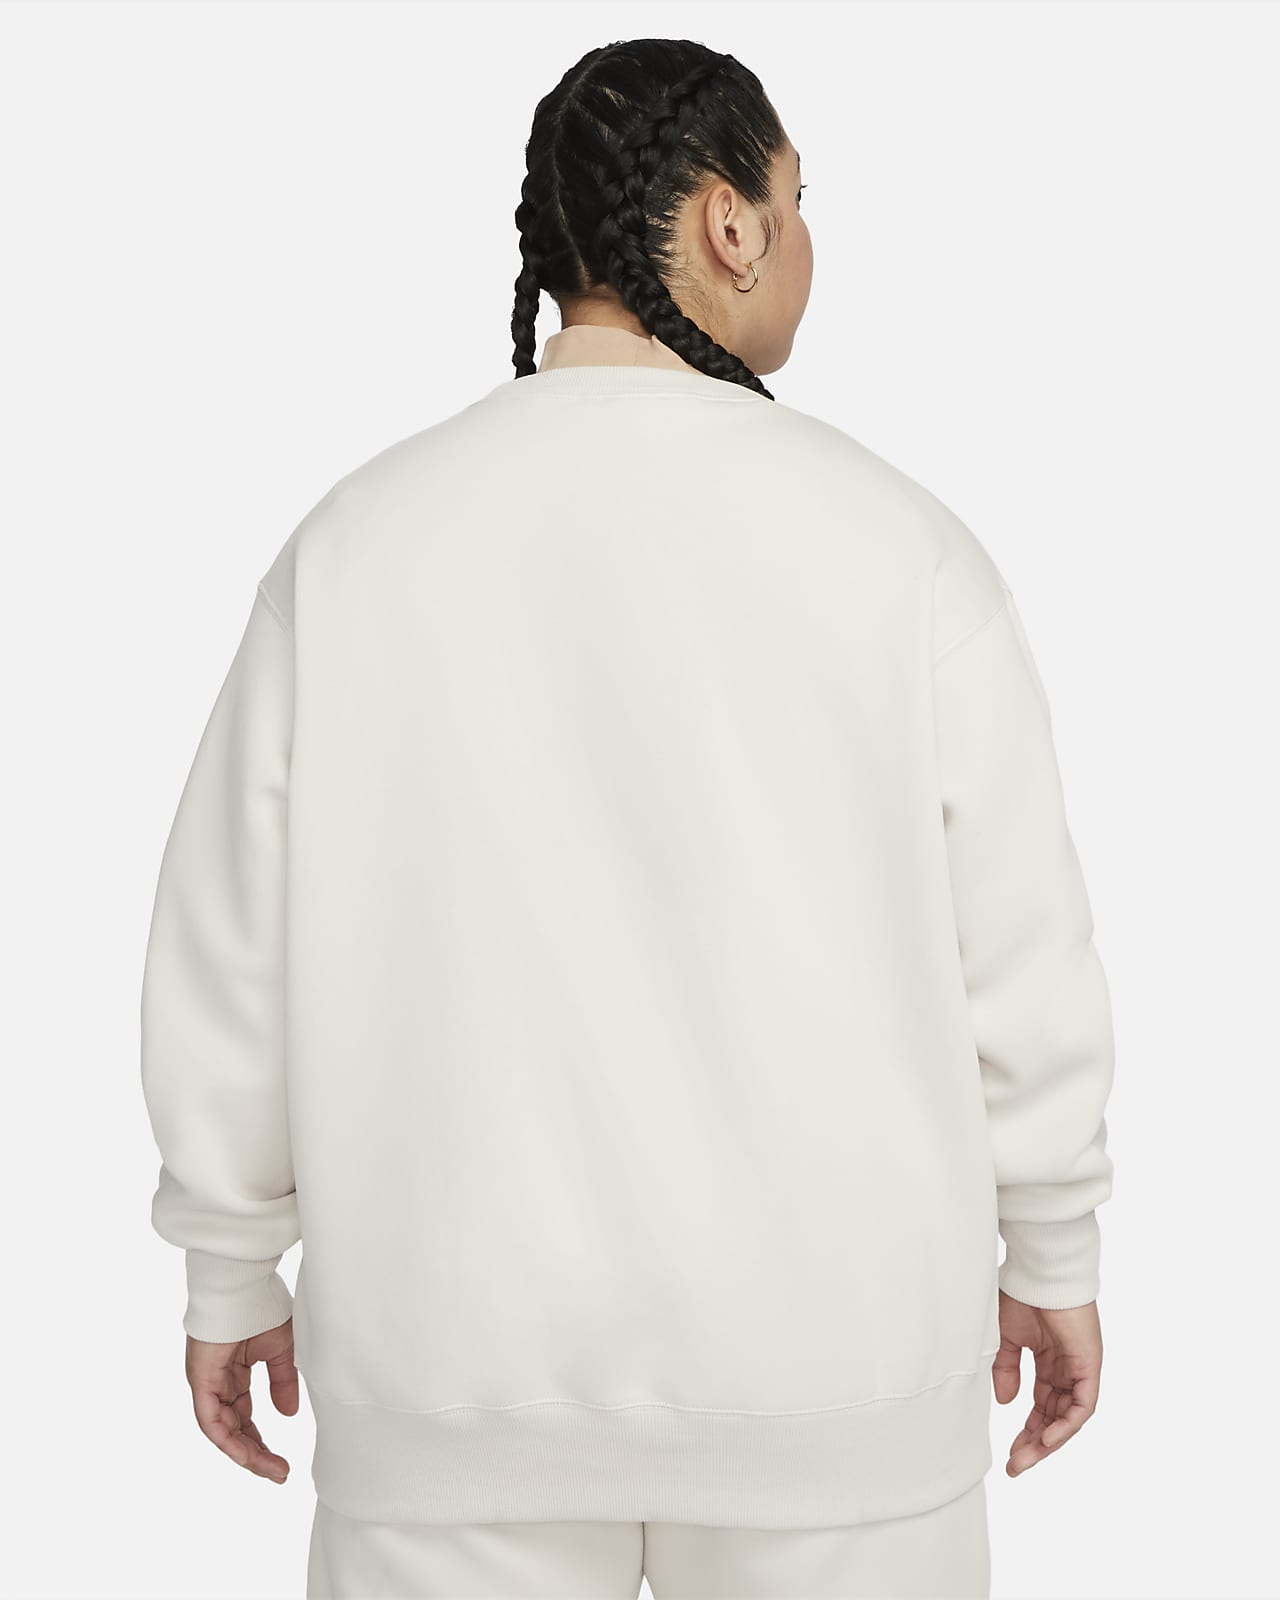 NIKE Women's Essential Swoosh Logo Fleece Sweatshirt Plus Size 3X